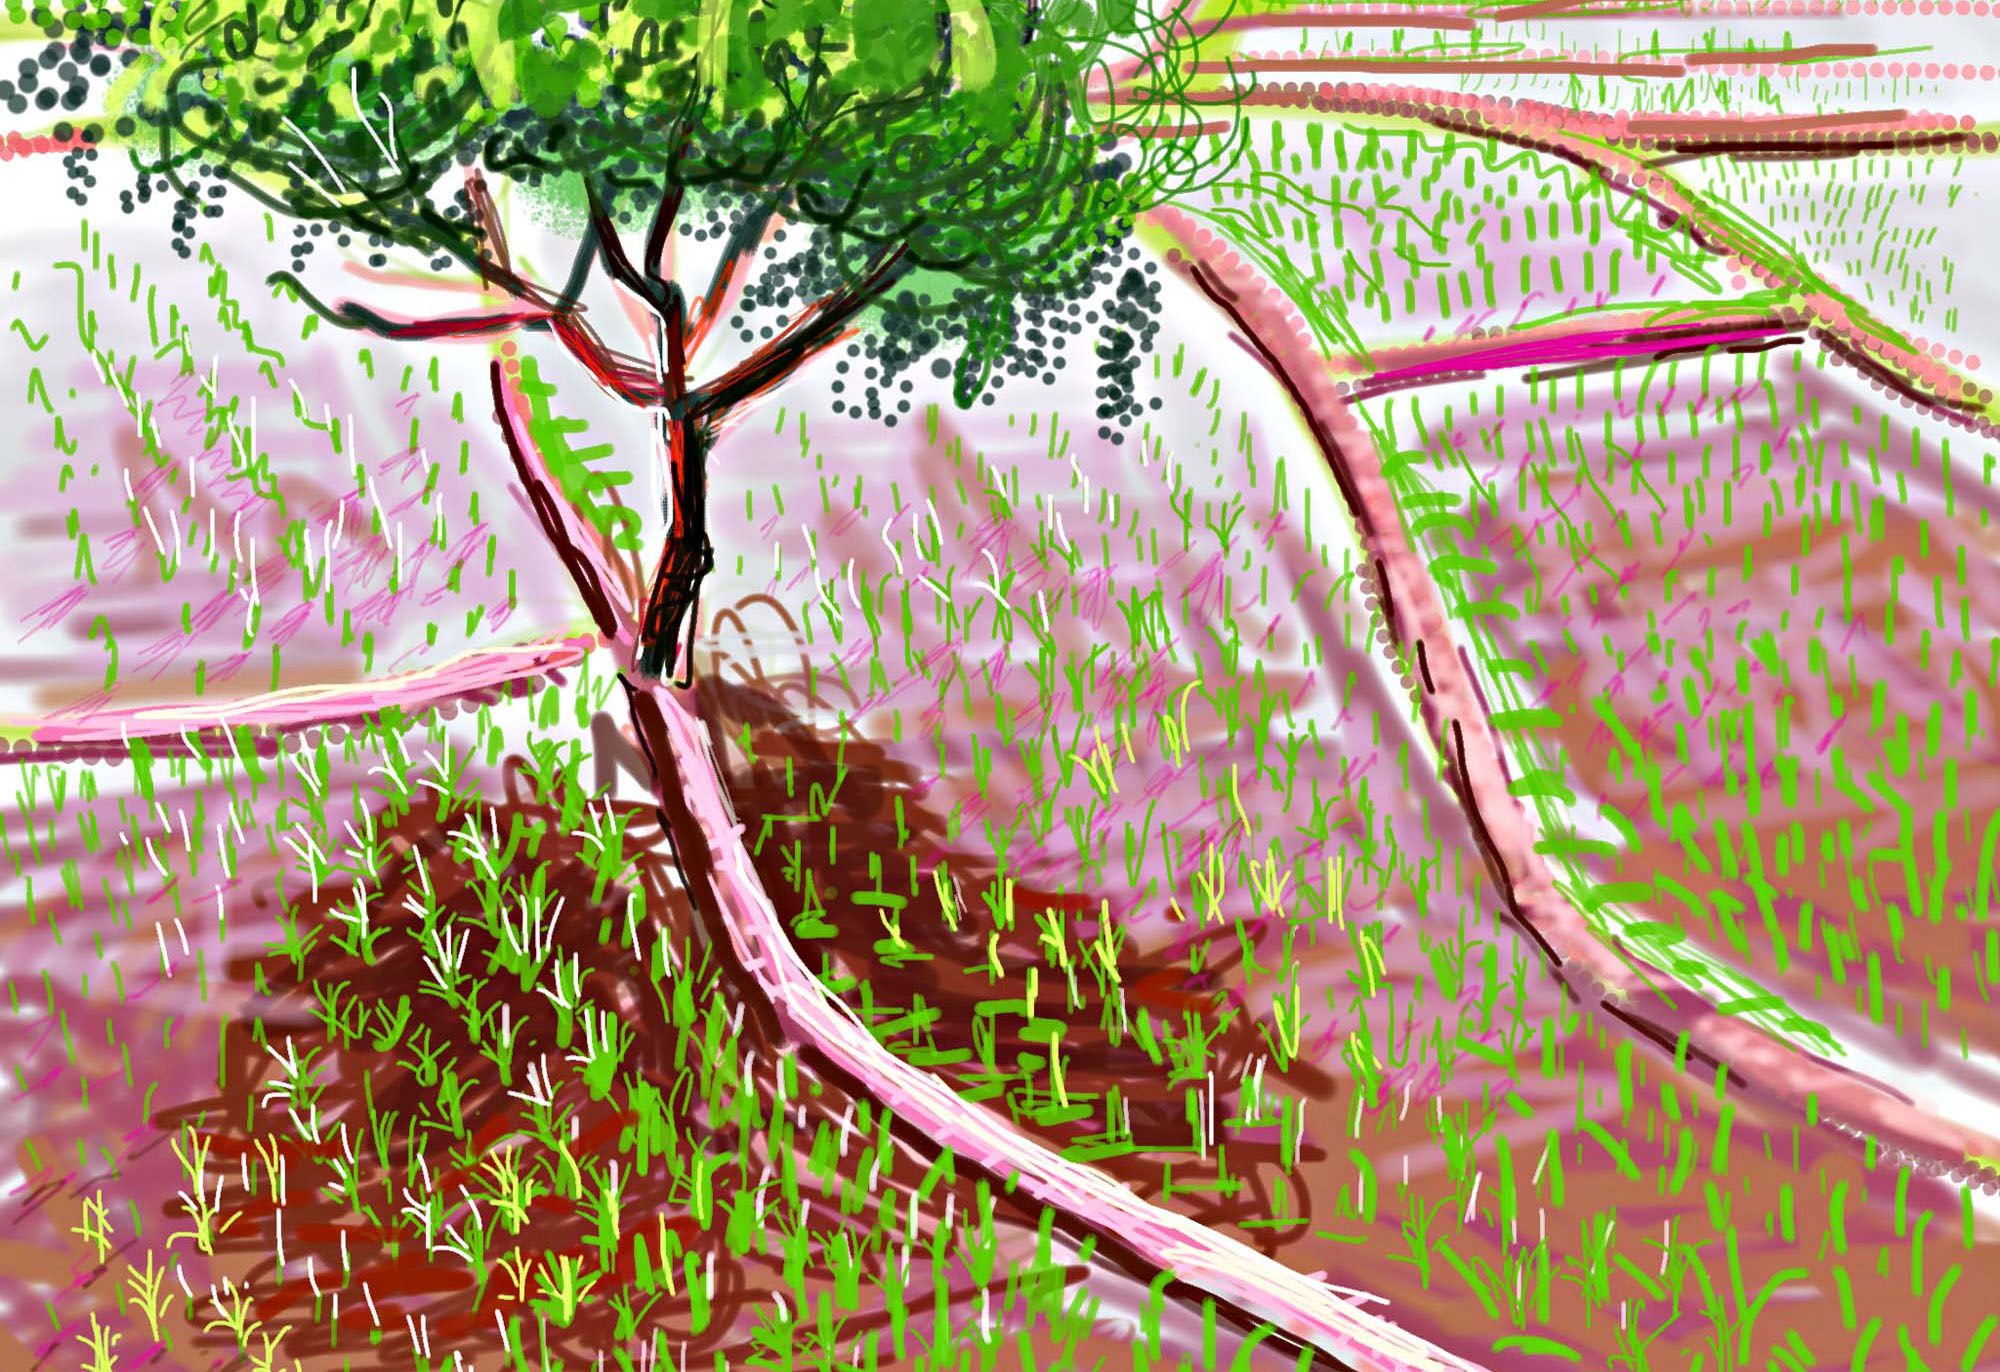 Andy Maitland, iPad artist, iPad drawing for Internal Year of Plant Health 2020